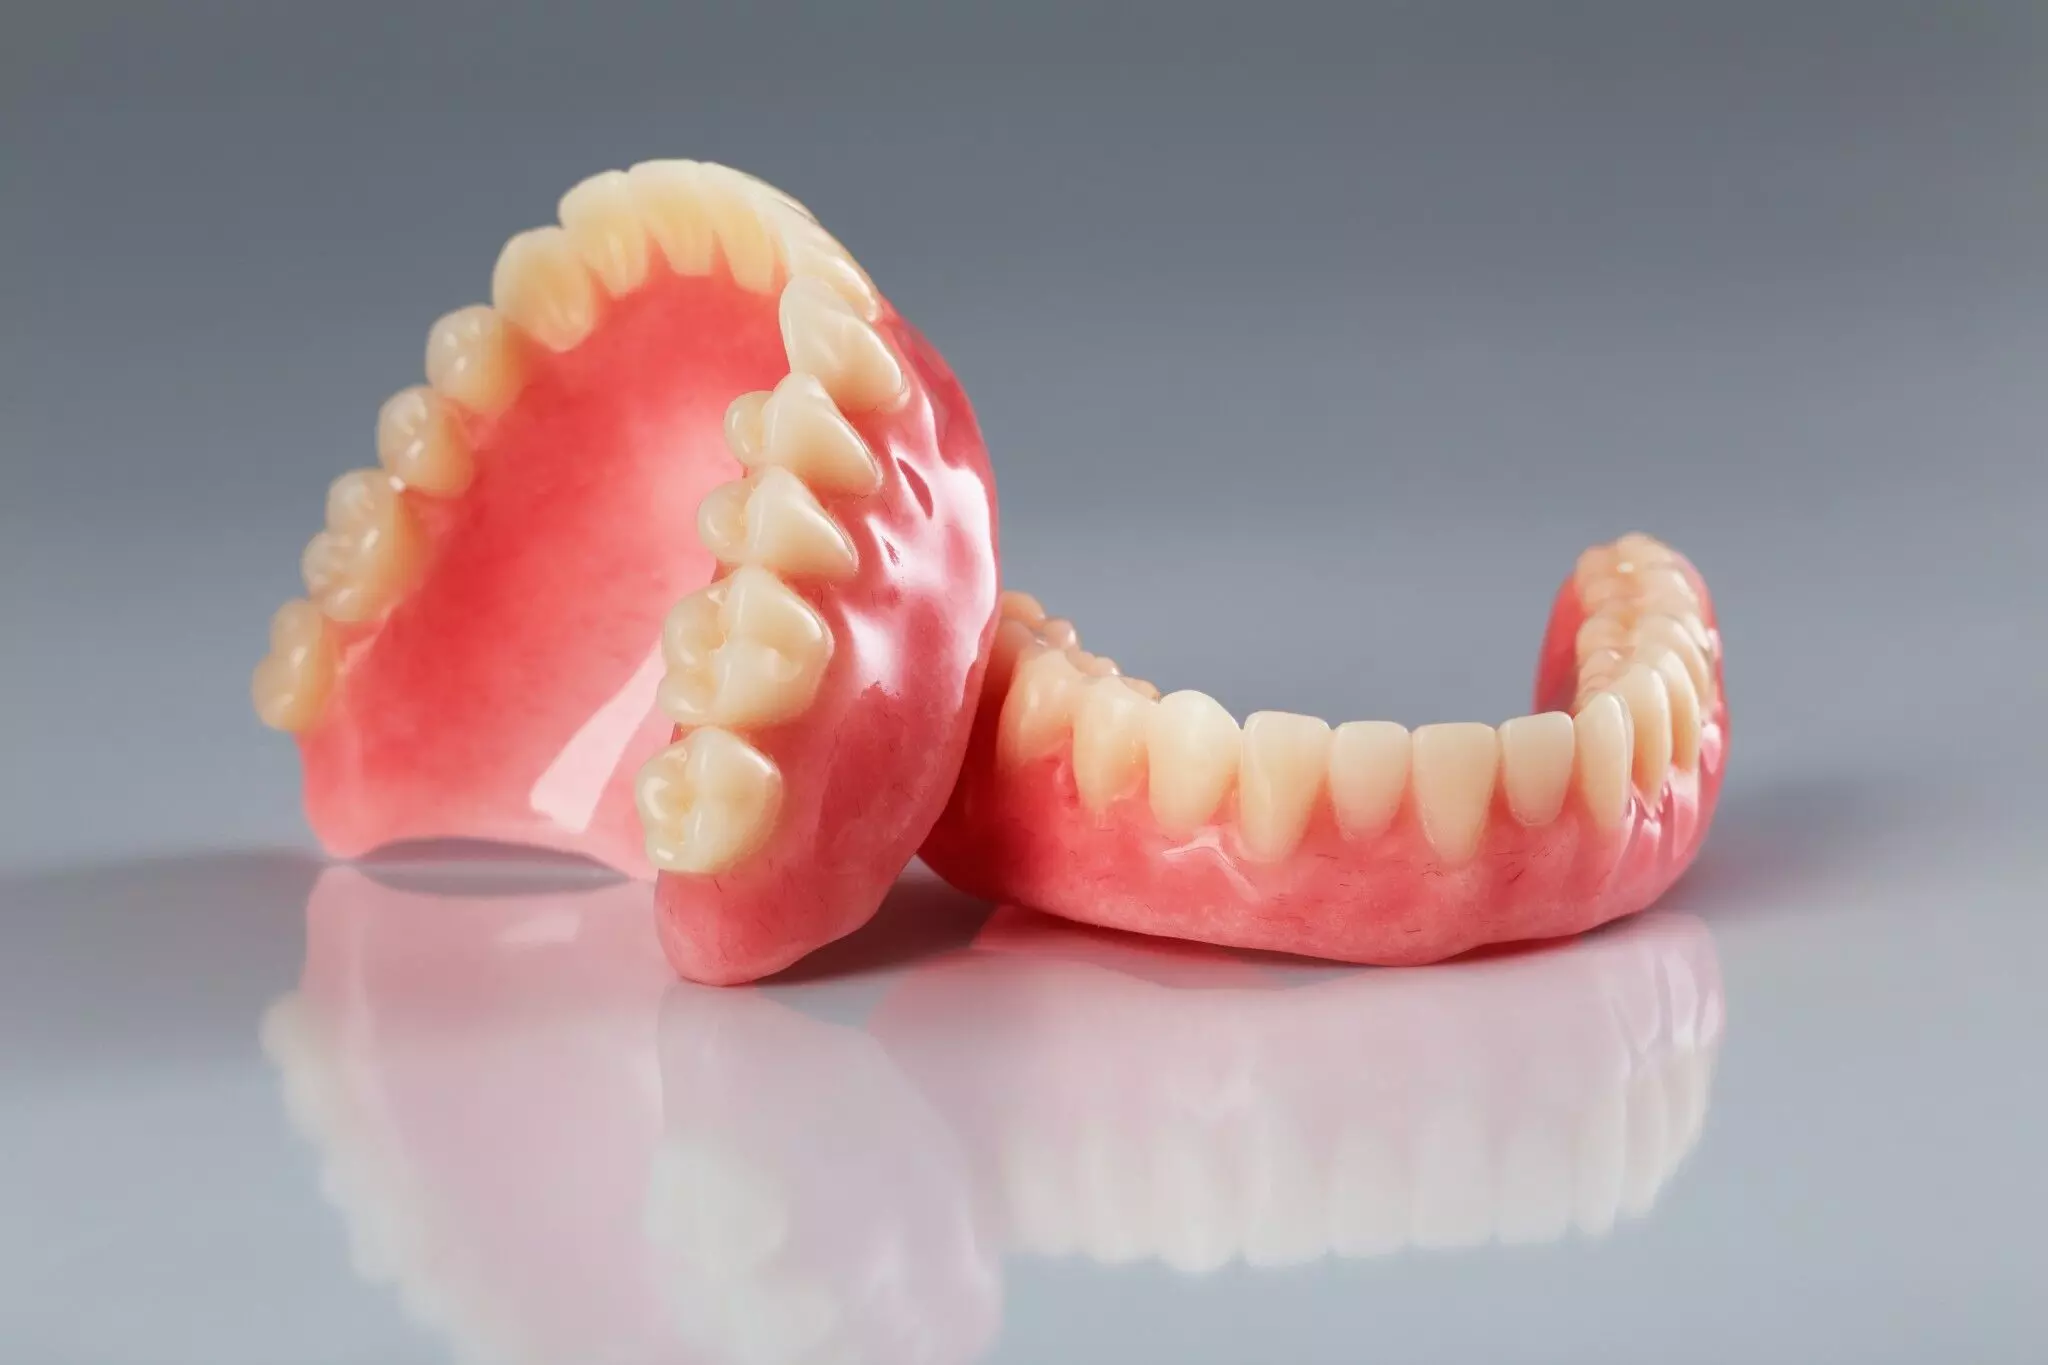 High-quality complete dentures do not guarantee patient satisfaction: Study